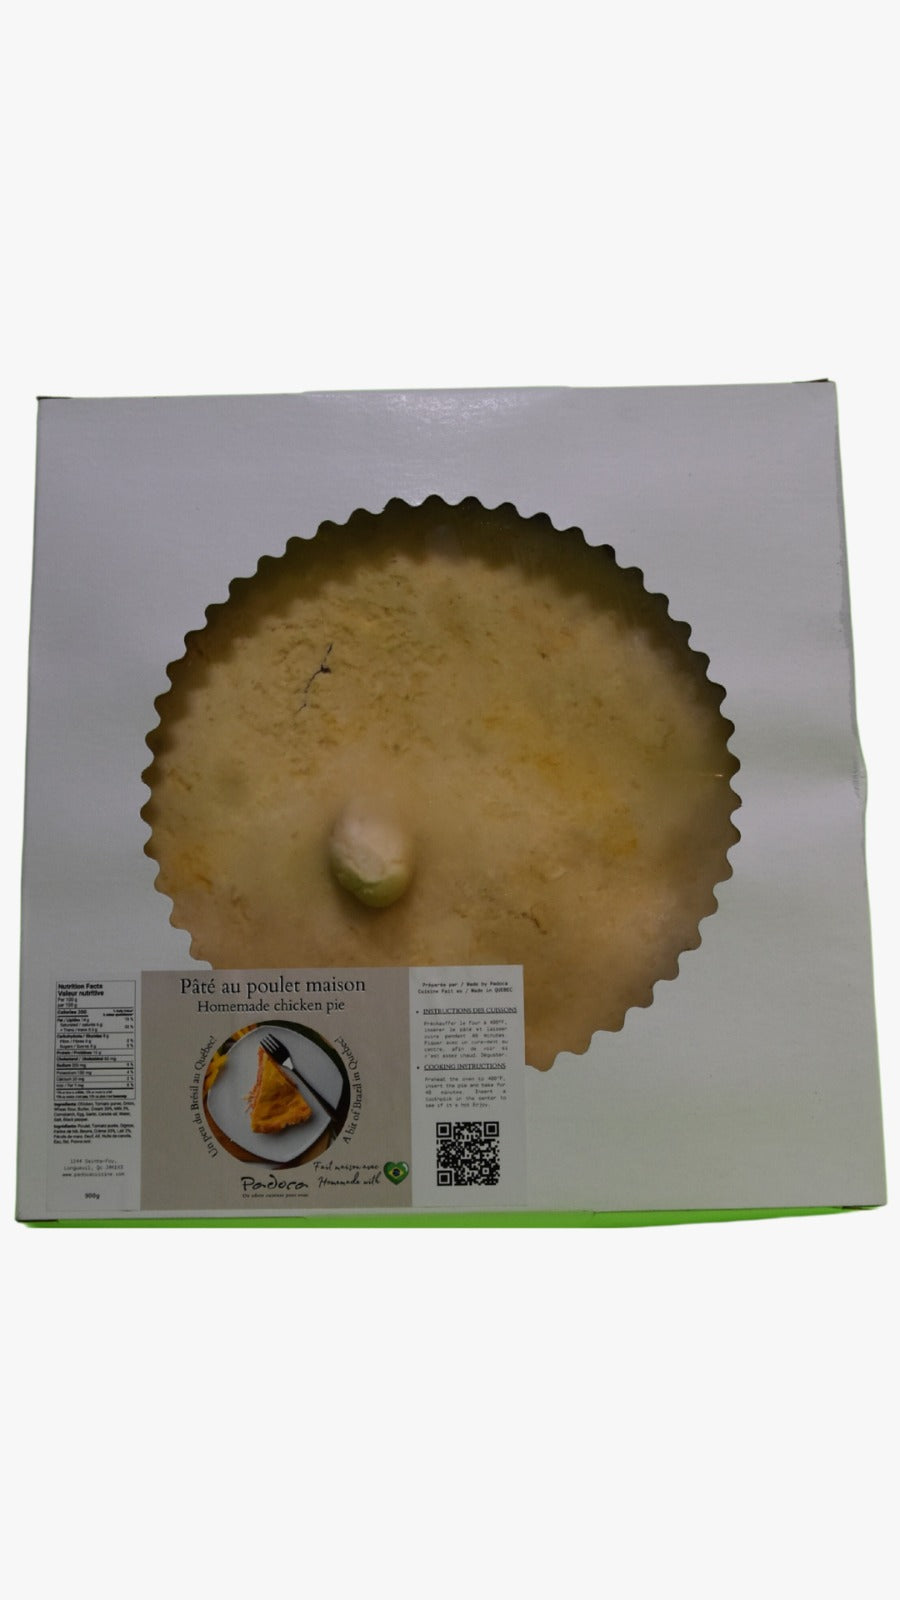 PADOCA - Chicken pie - 900g - FINAL SALE - EXPIRED or CLOSE TO EXPIRY